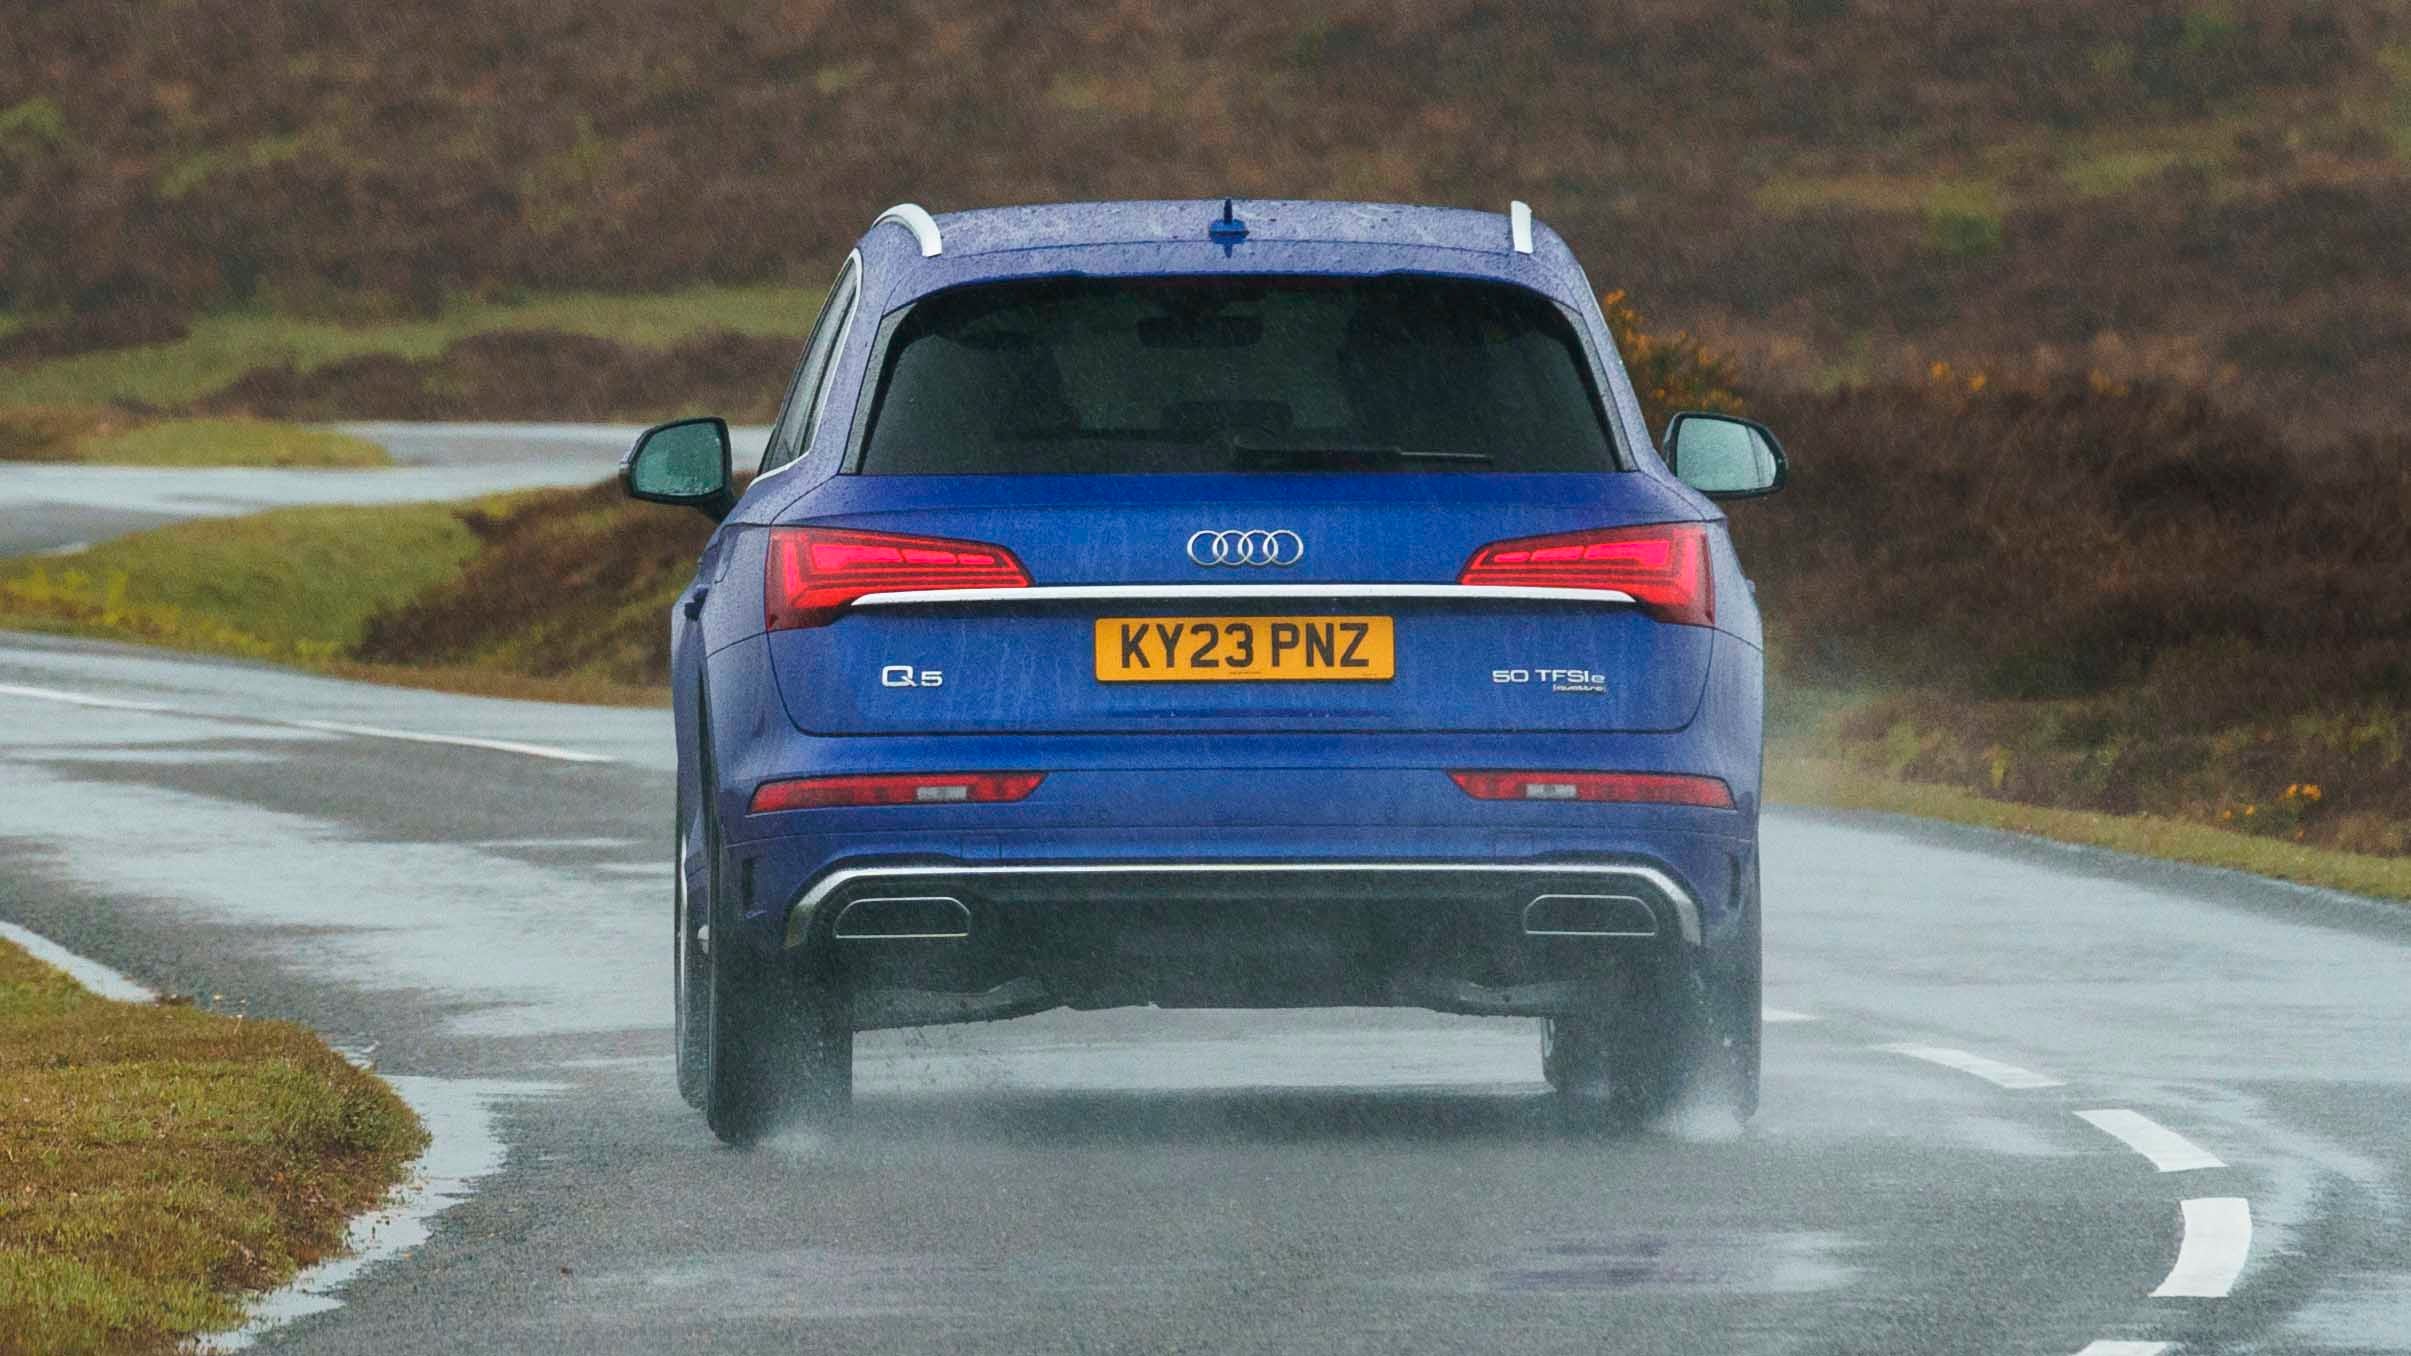 Audi Q5 driving rear view